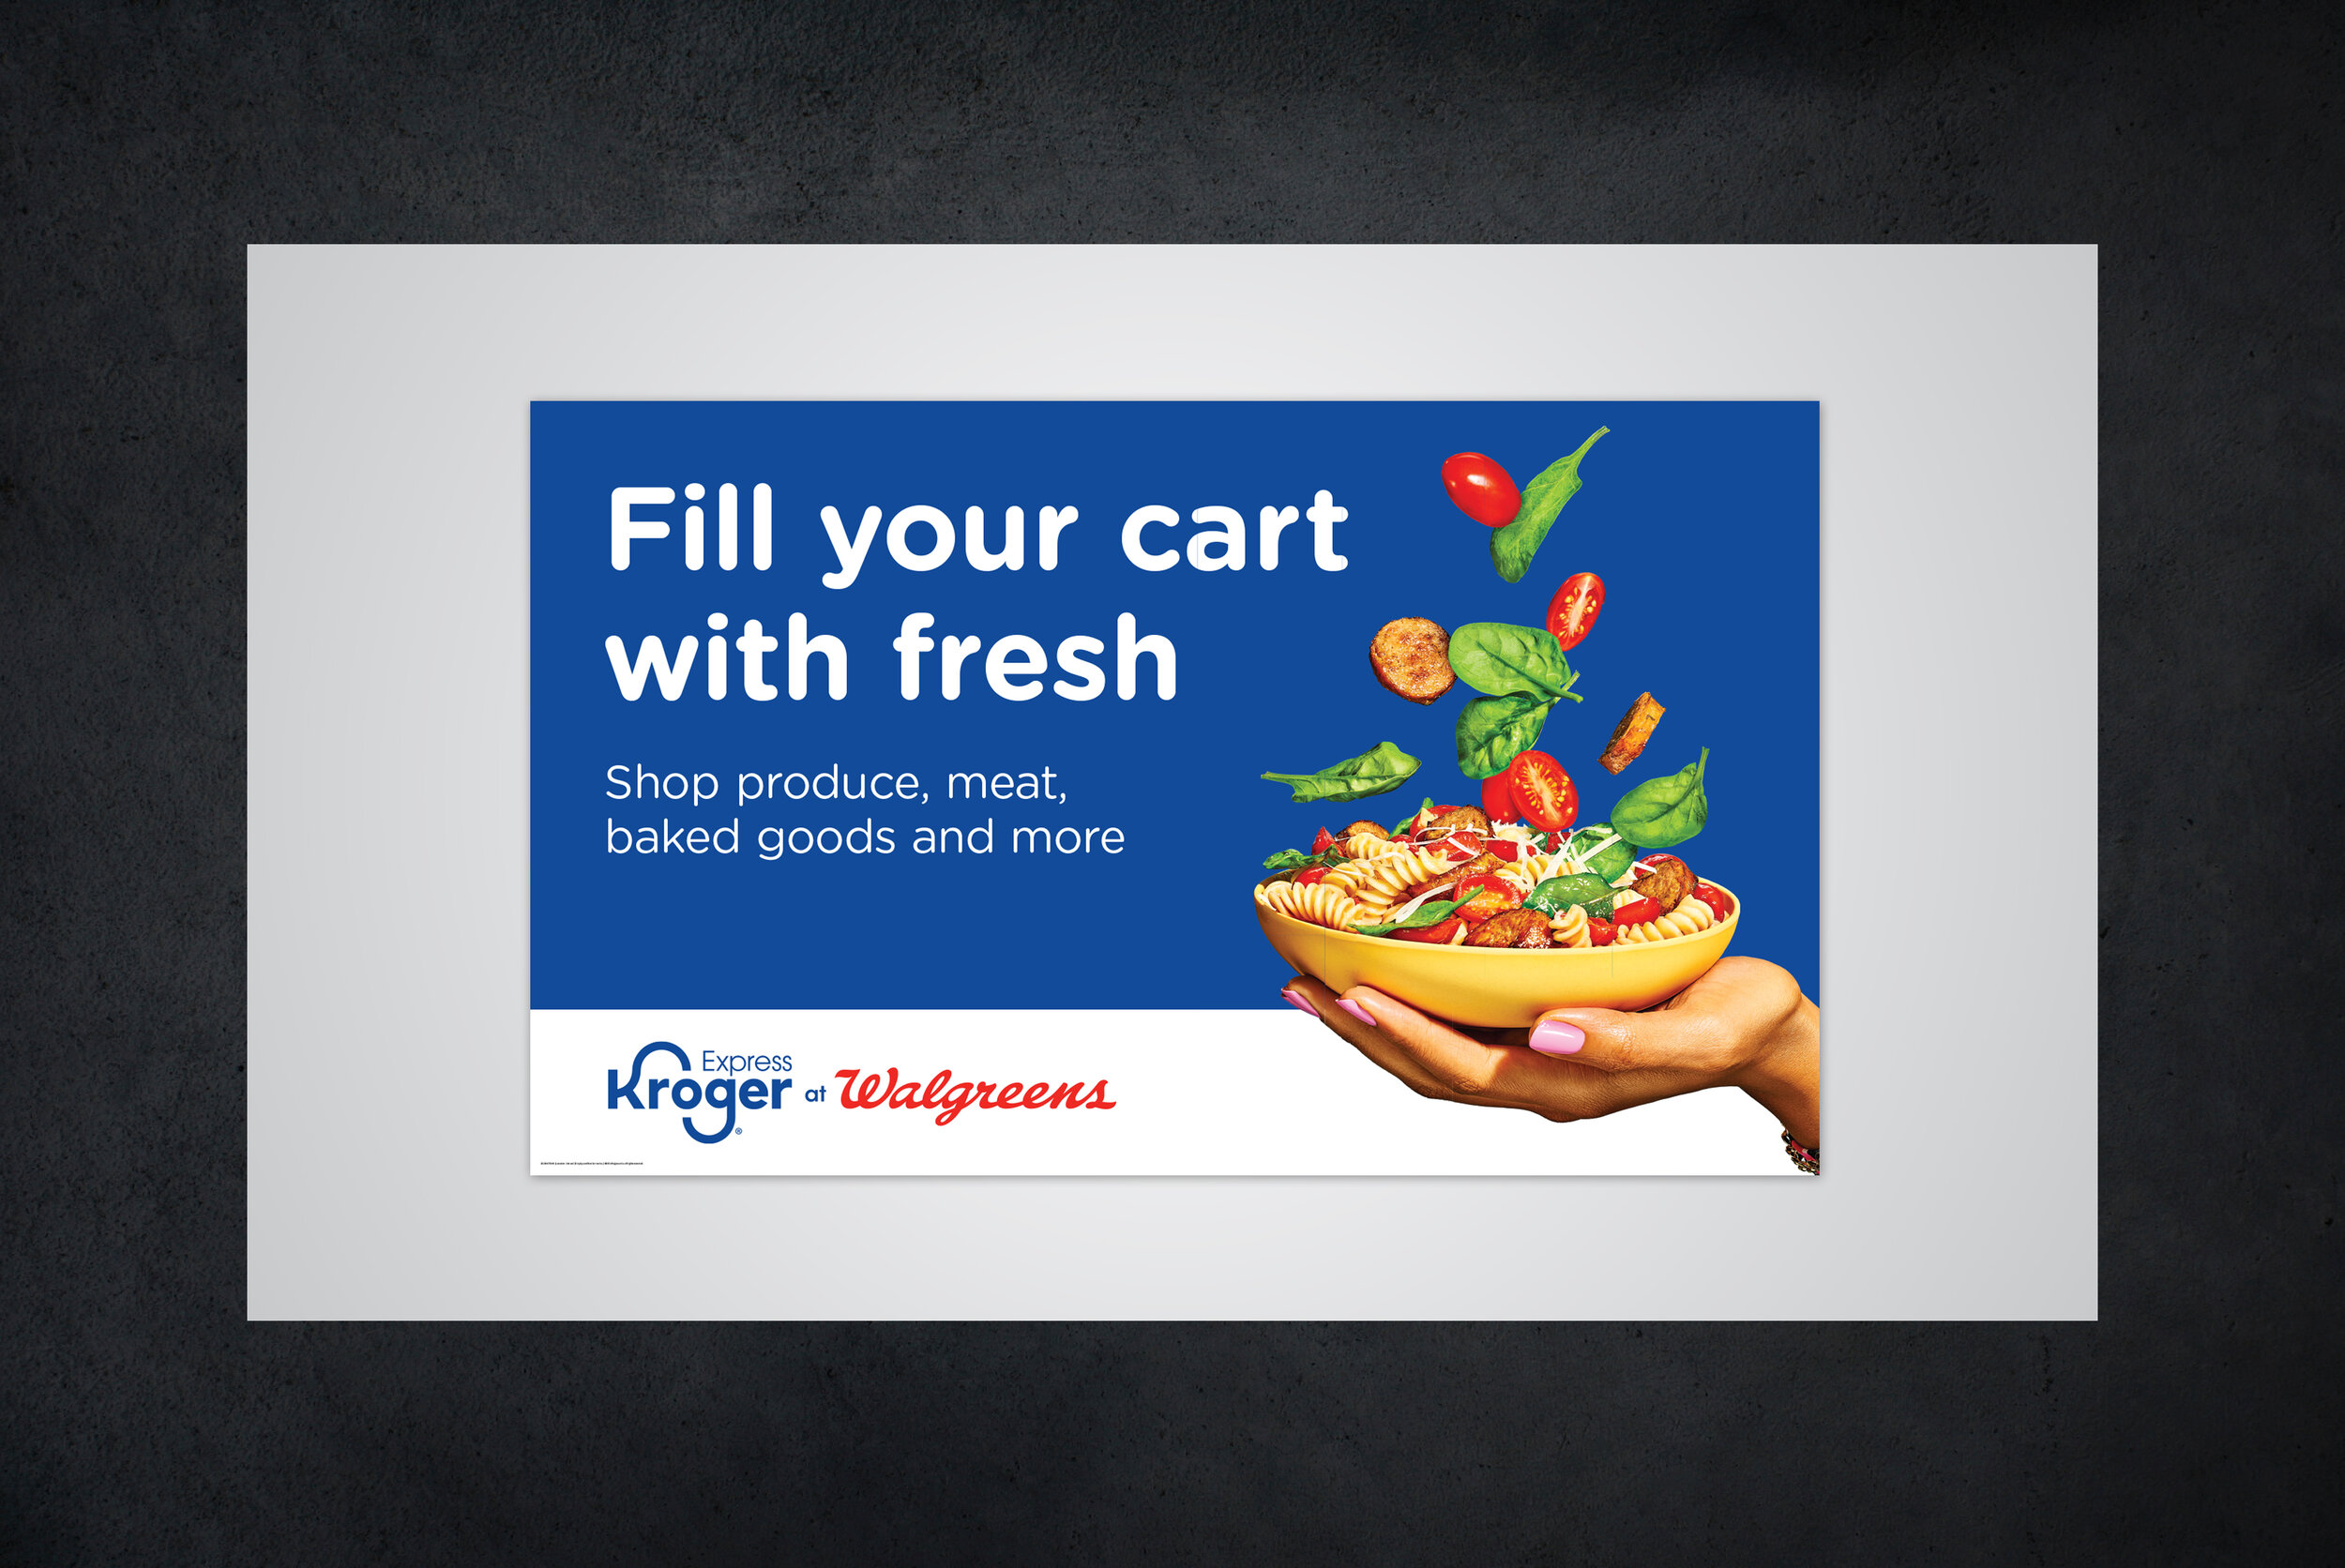 Kroger Express at Walgreens poster